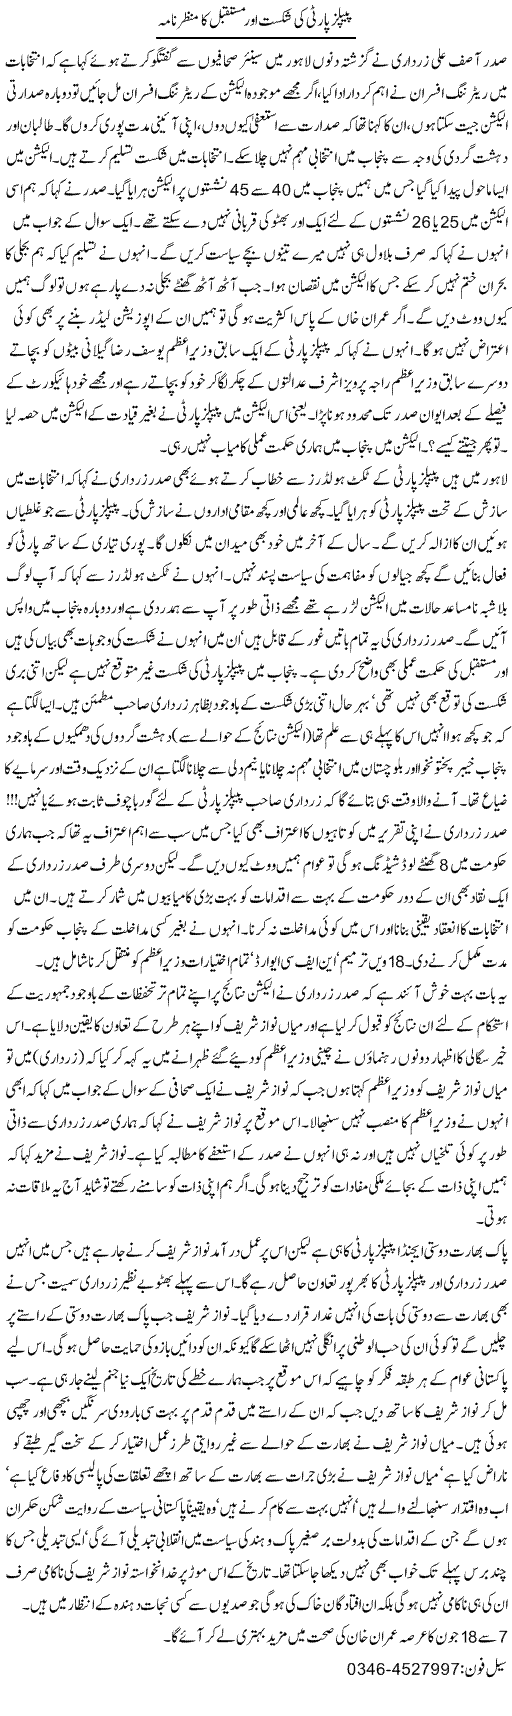 PPP Ki Shikast Our Mustaqbil Ka Manzar Nama | Zamurd Naqvi | Daily Urdu Columns